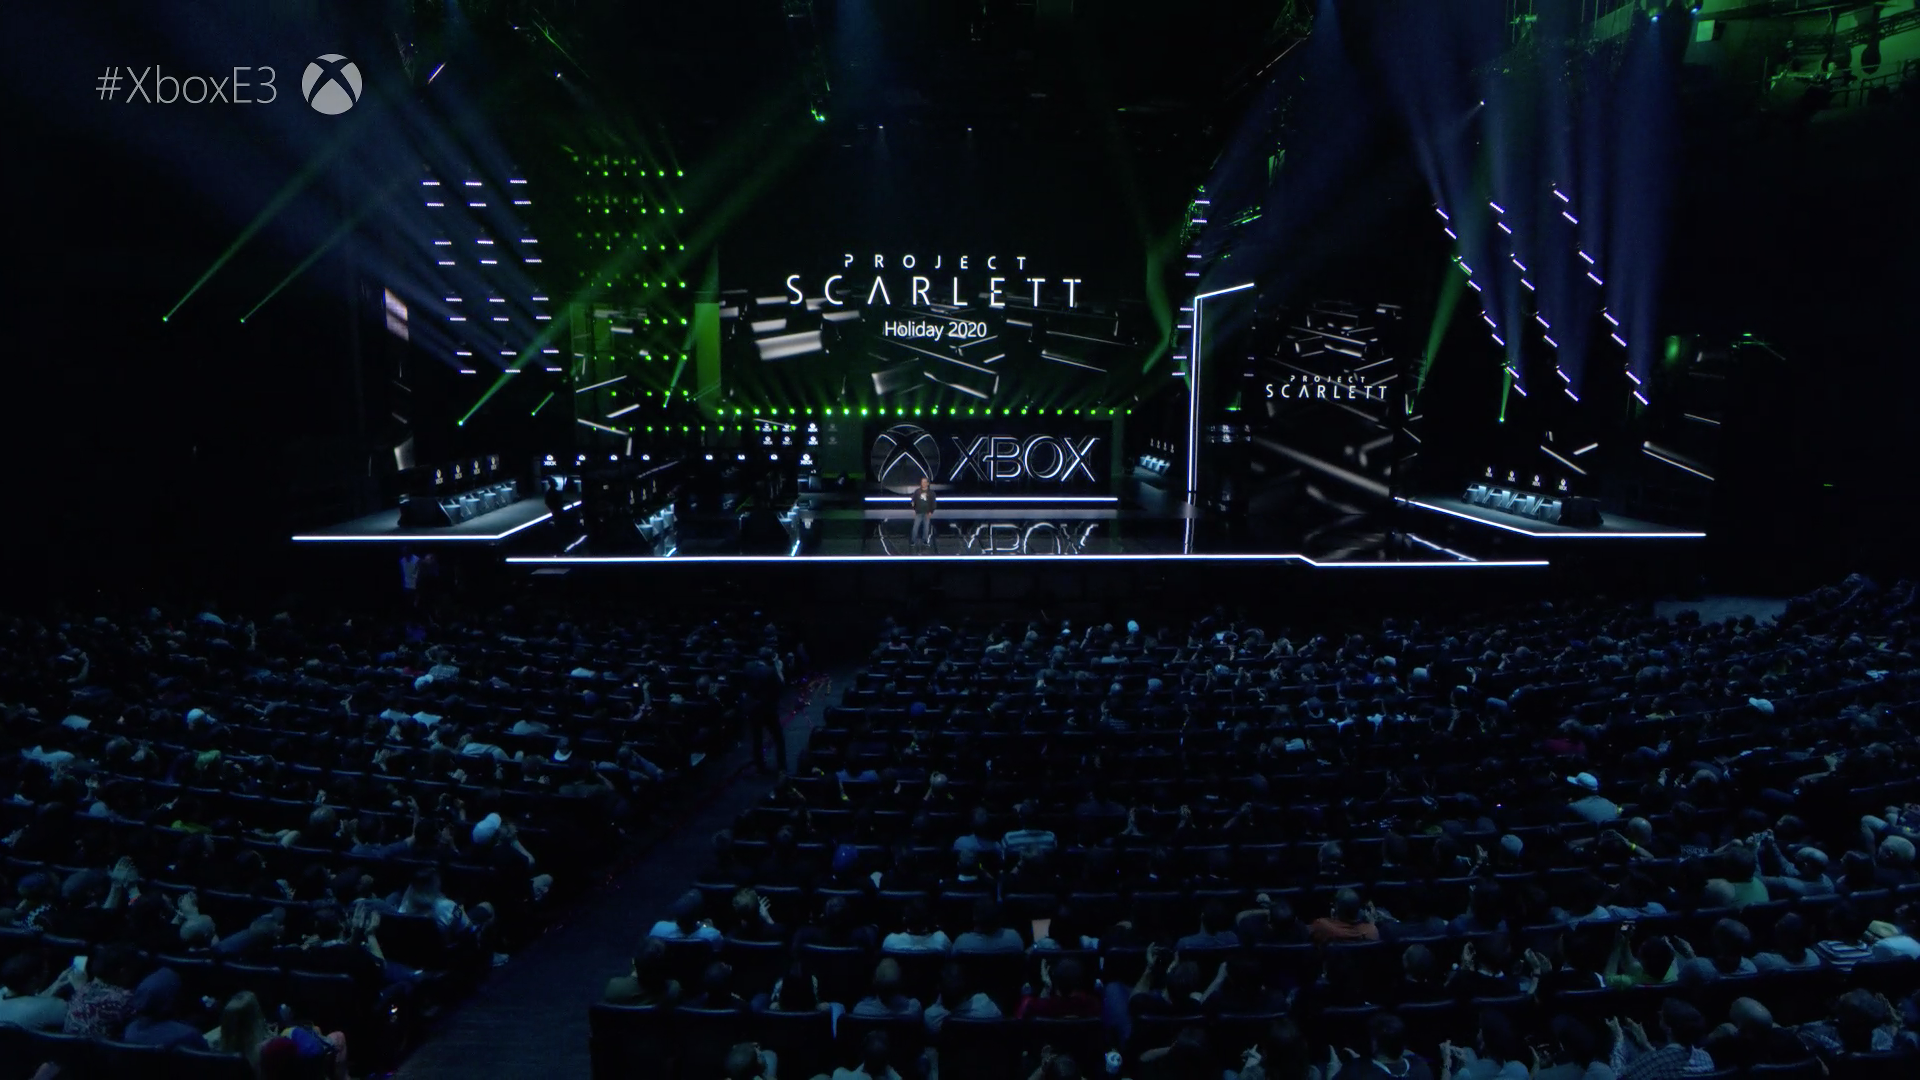 Microsoft Announces Project Scarlett, The Next-Gen Xbox